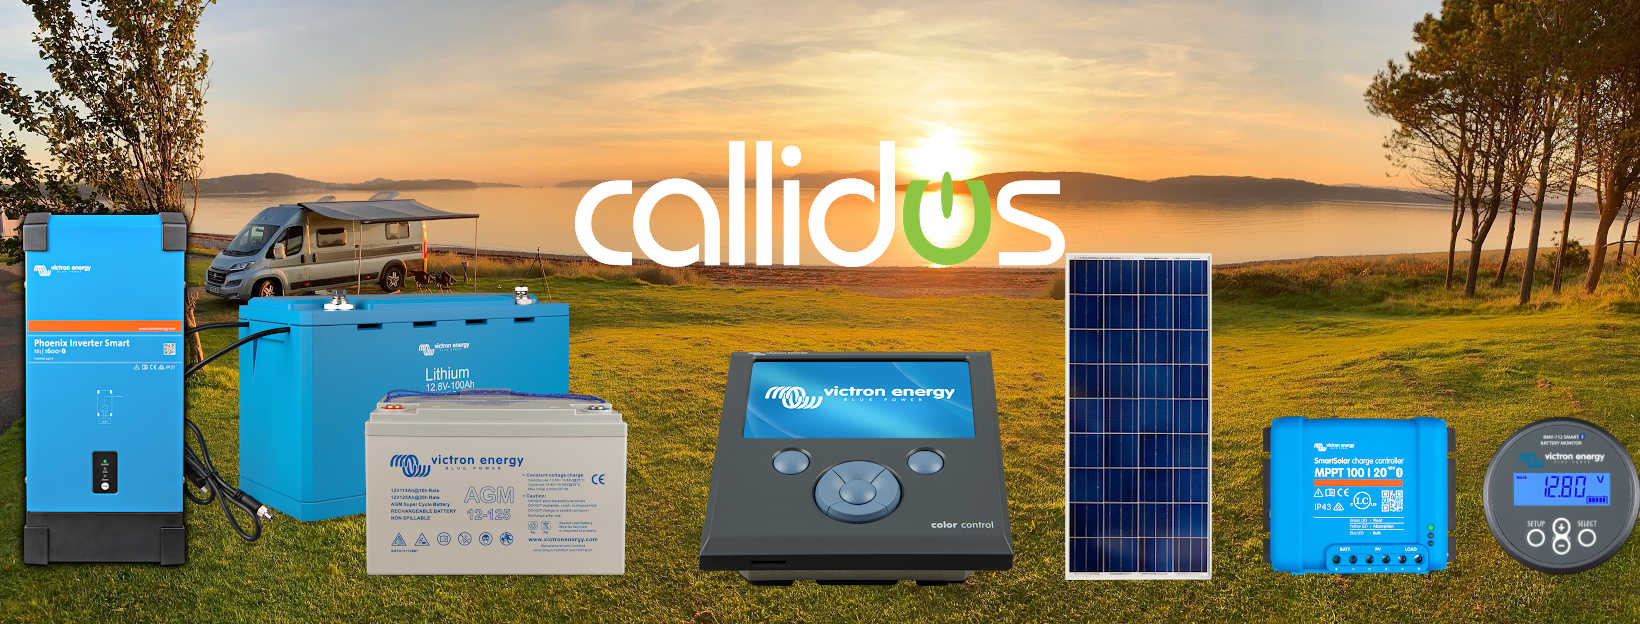 Callidus Solar & Battery Shop